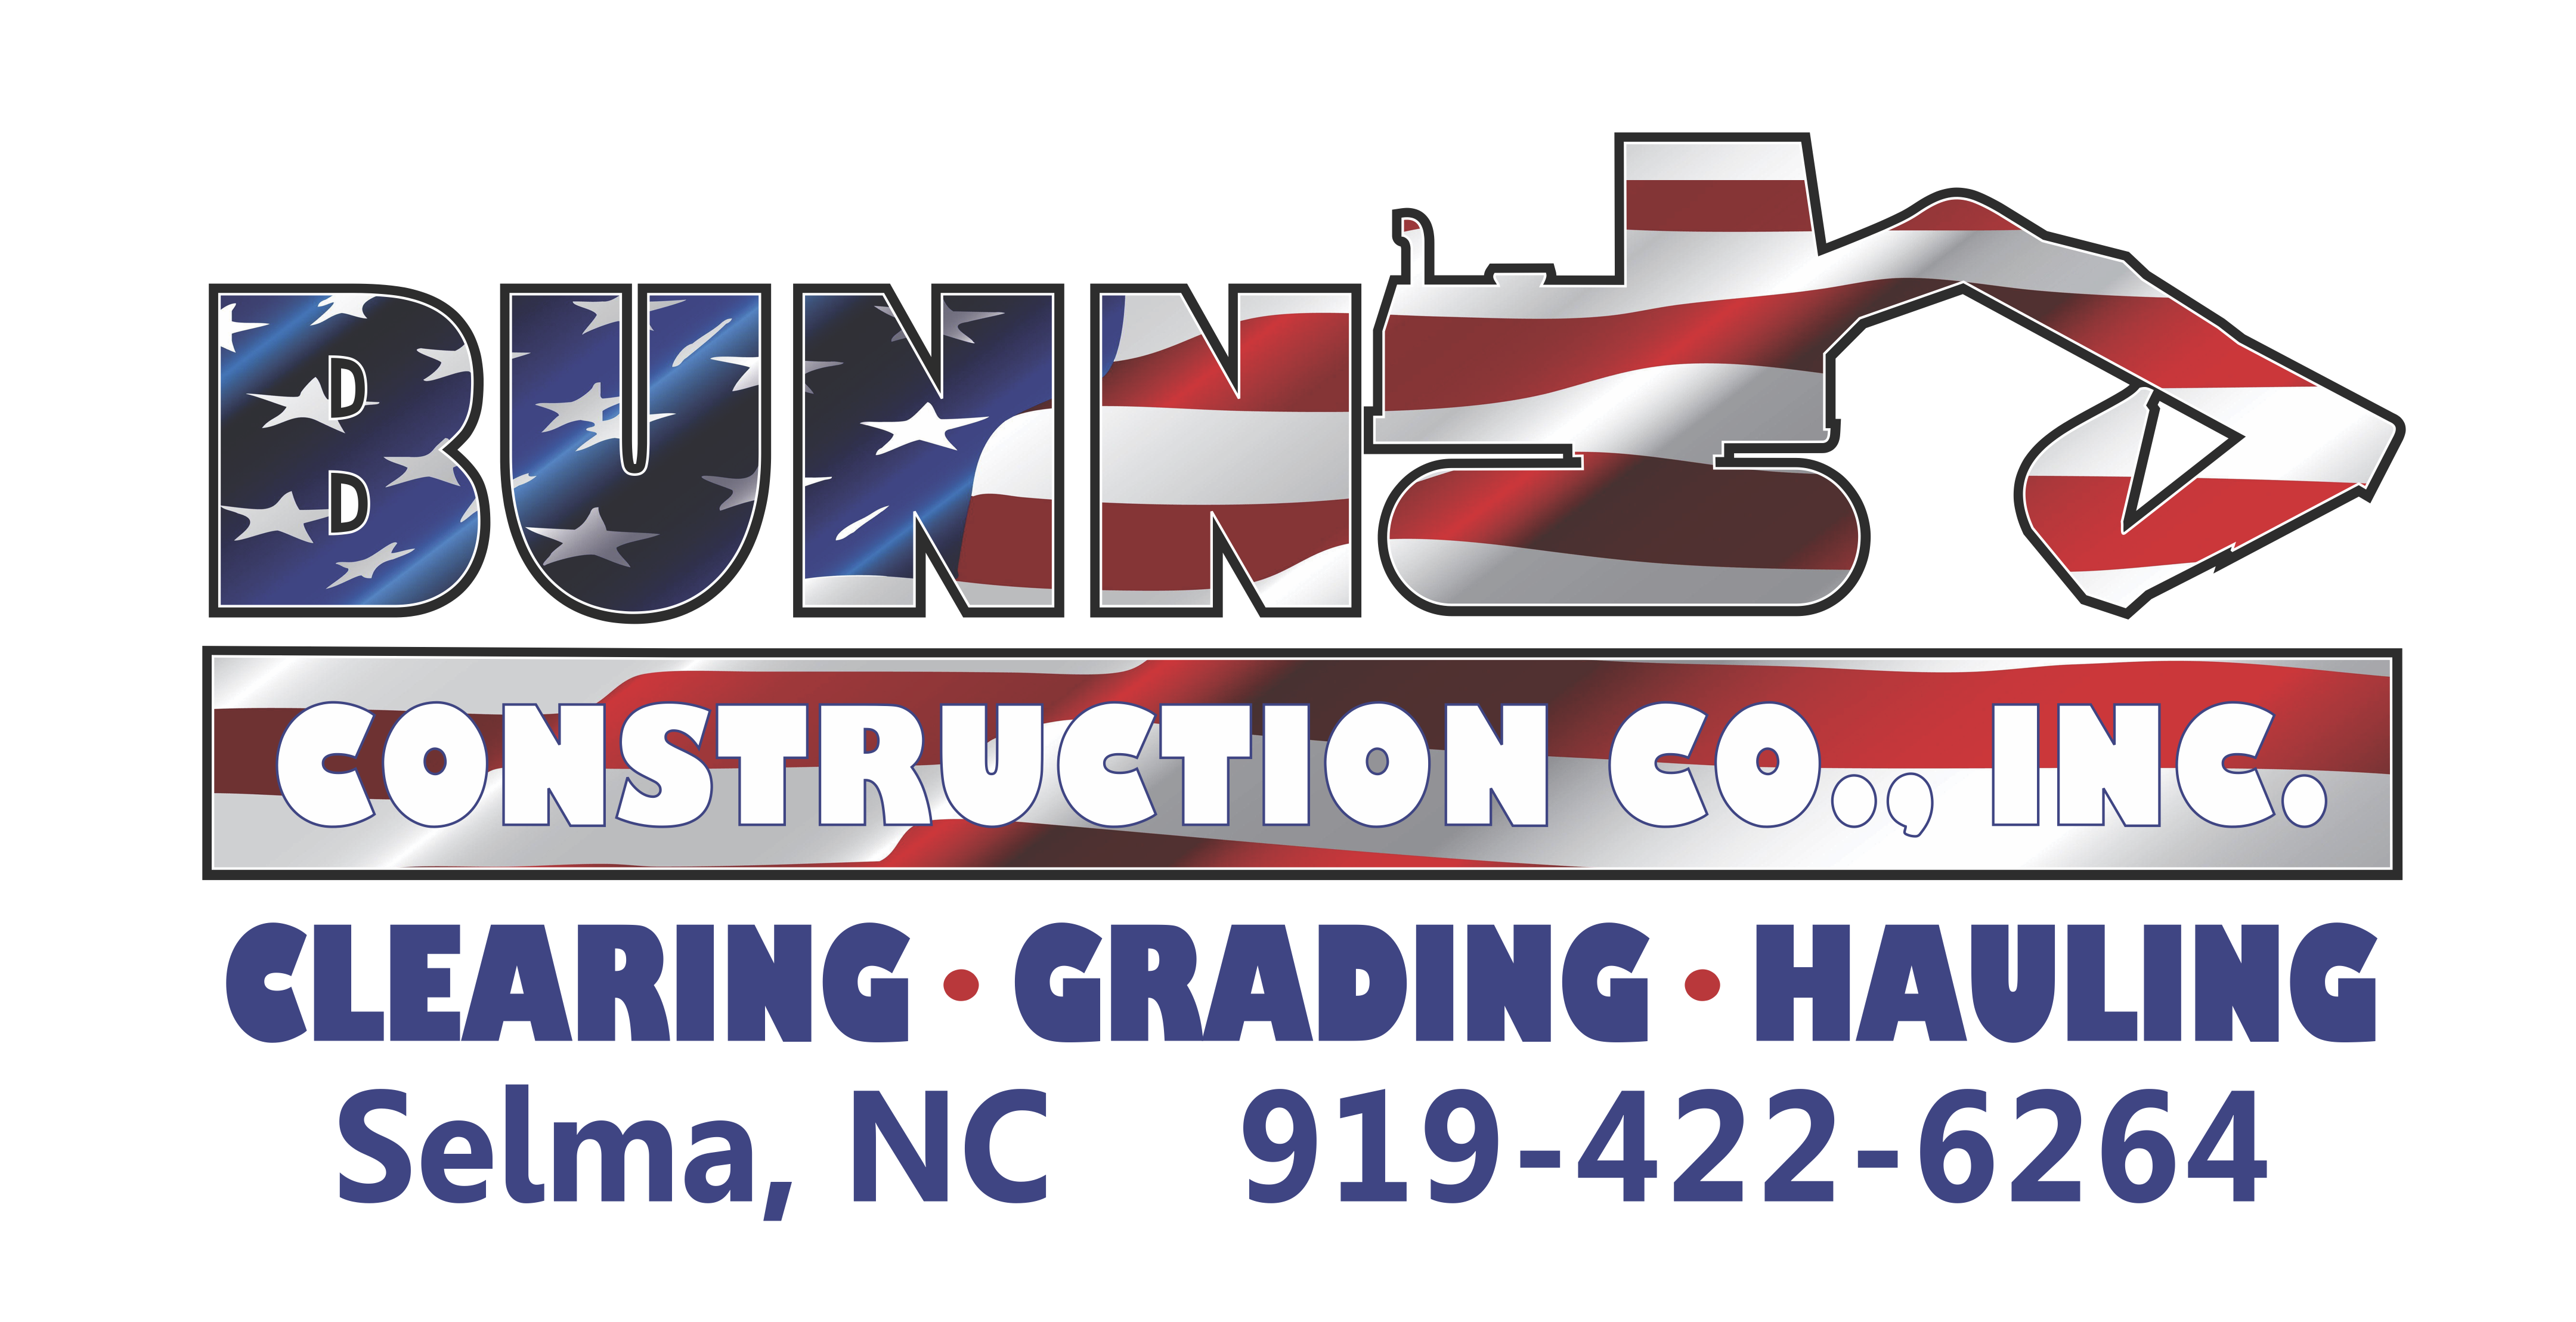 Bunn Construction Co Inc